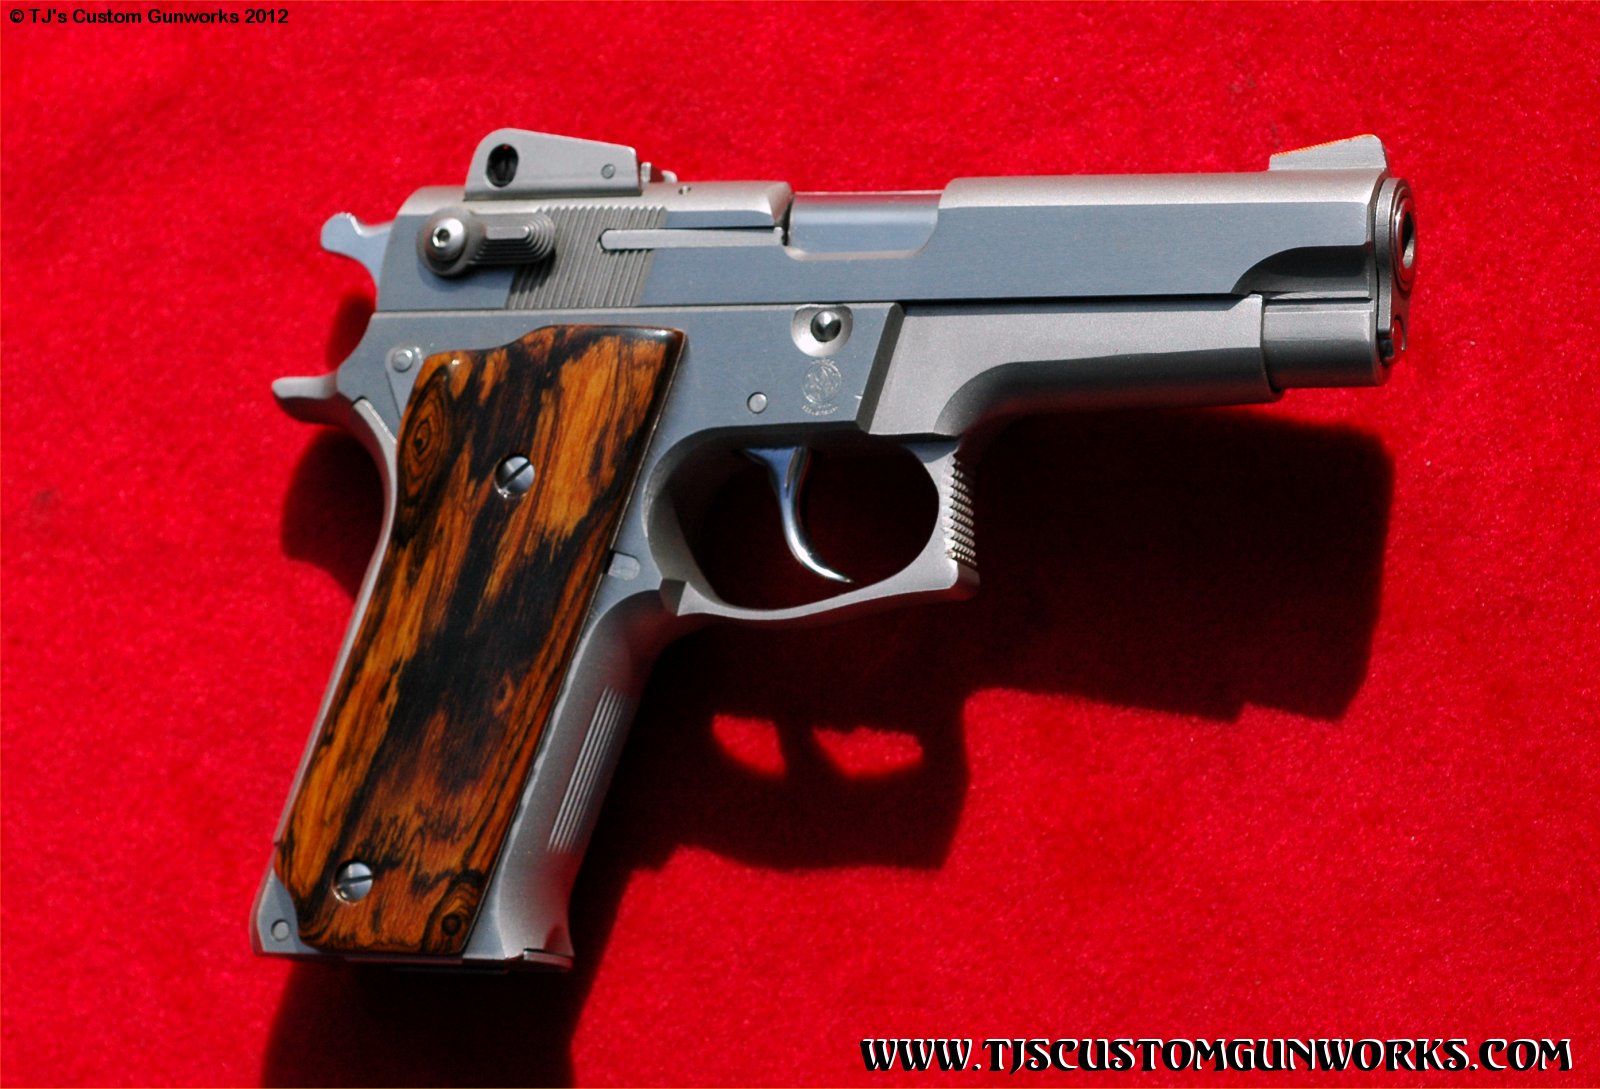 TJ's Custom Smith & Wesson 659 9mm 2